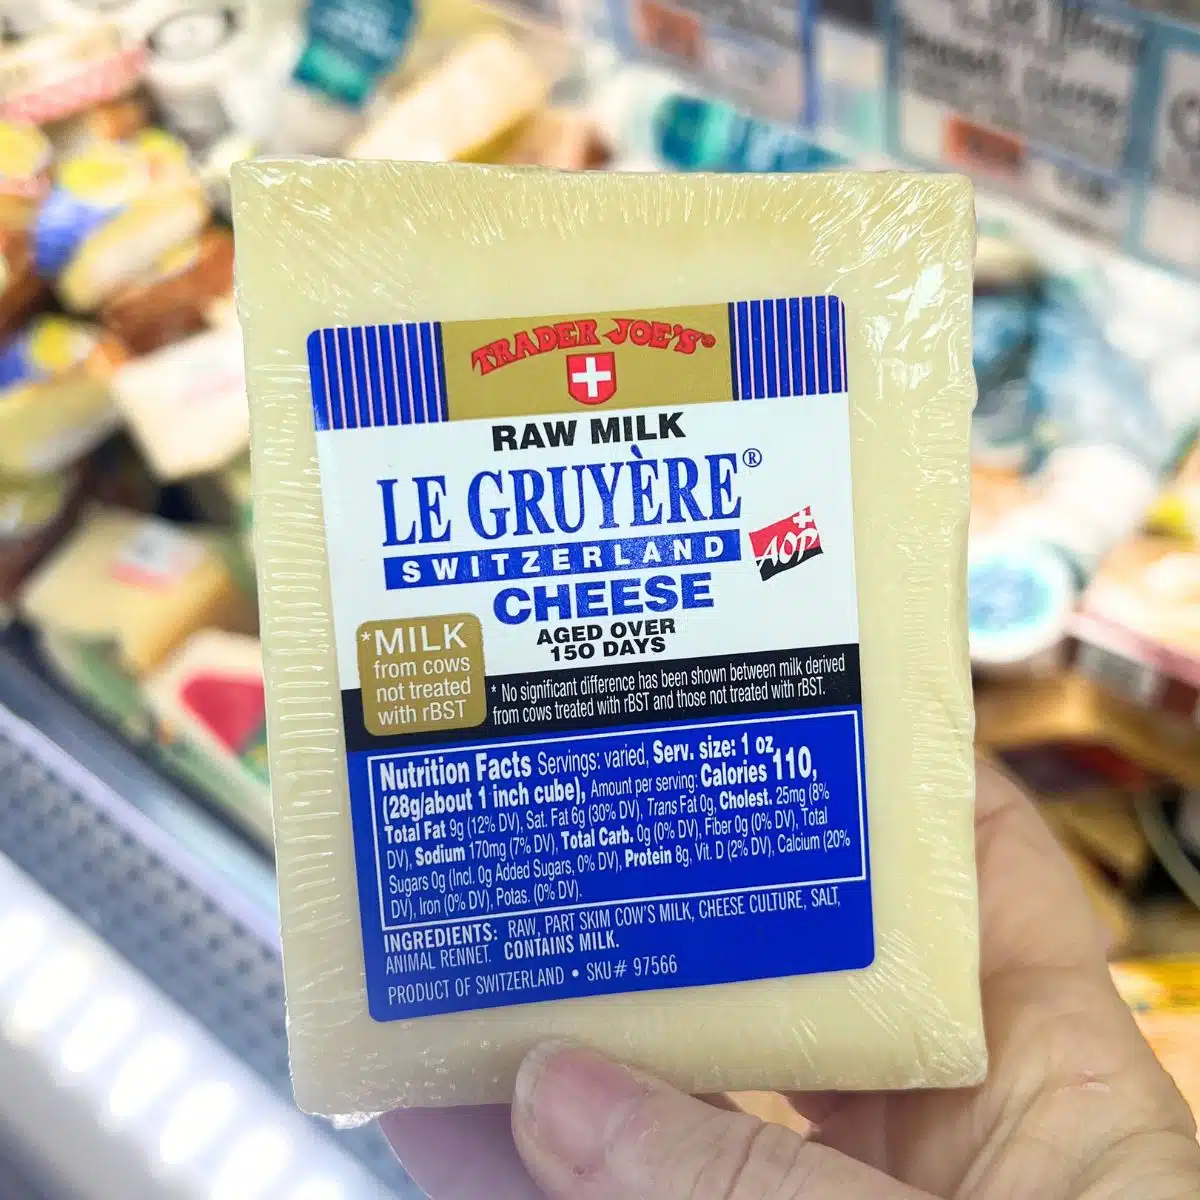 Trader Joe's Raw Milk Le Gruyere cheese.